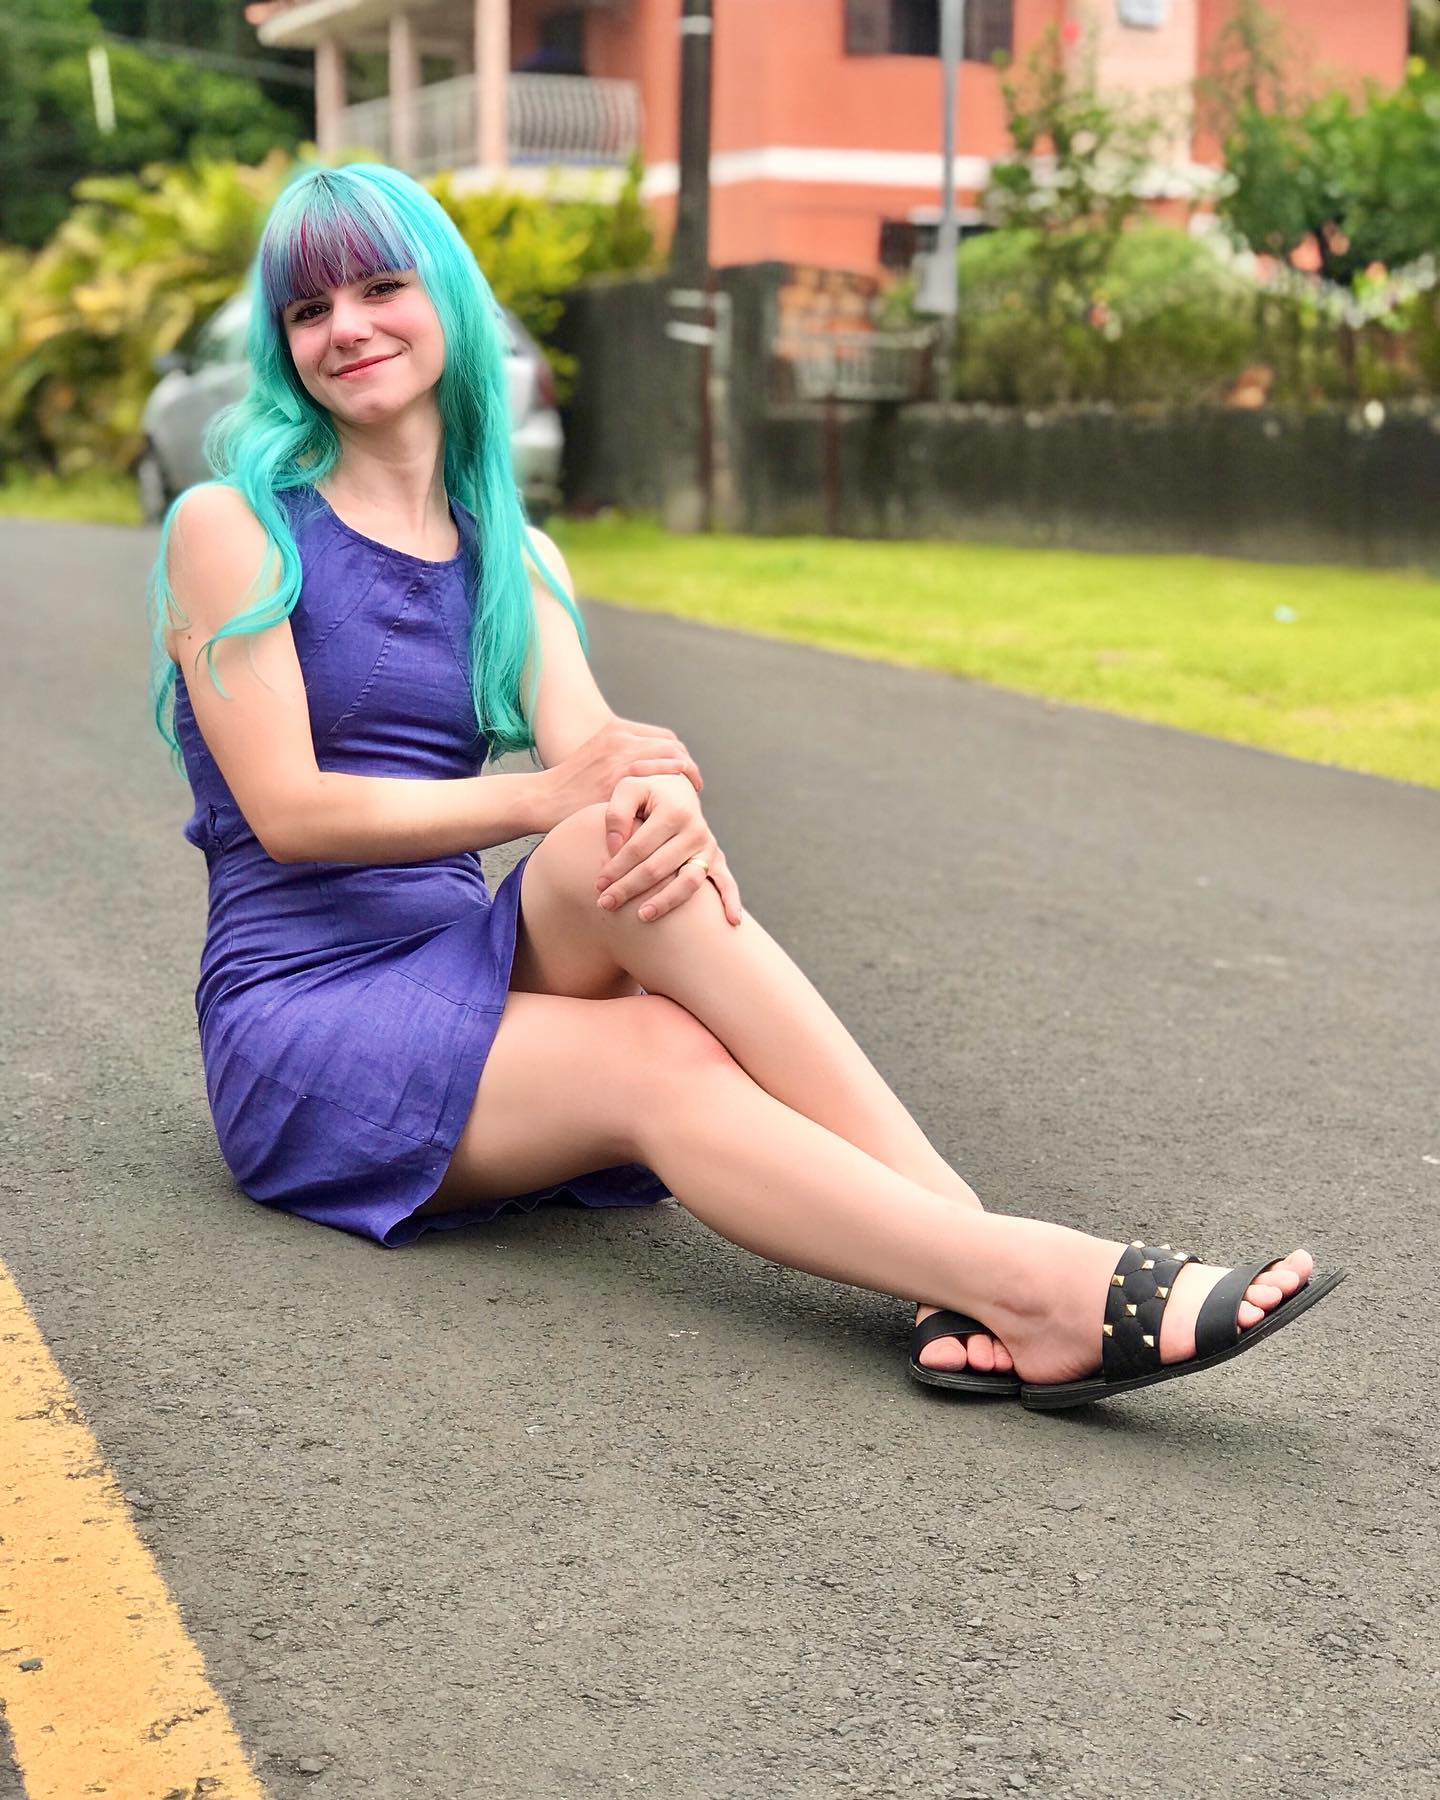 Belo look da cosplayer brasileira Bruna, com vestido azul